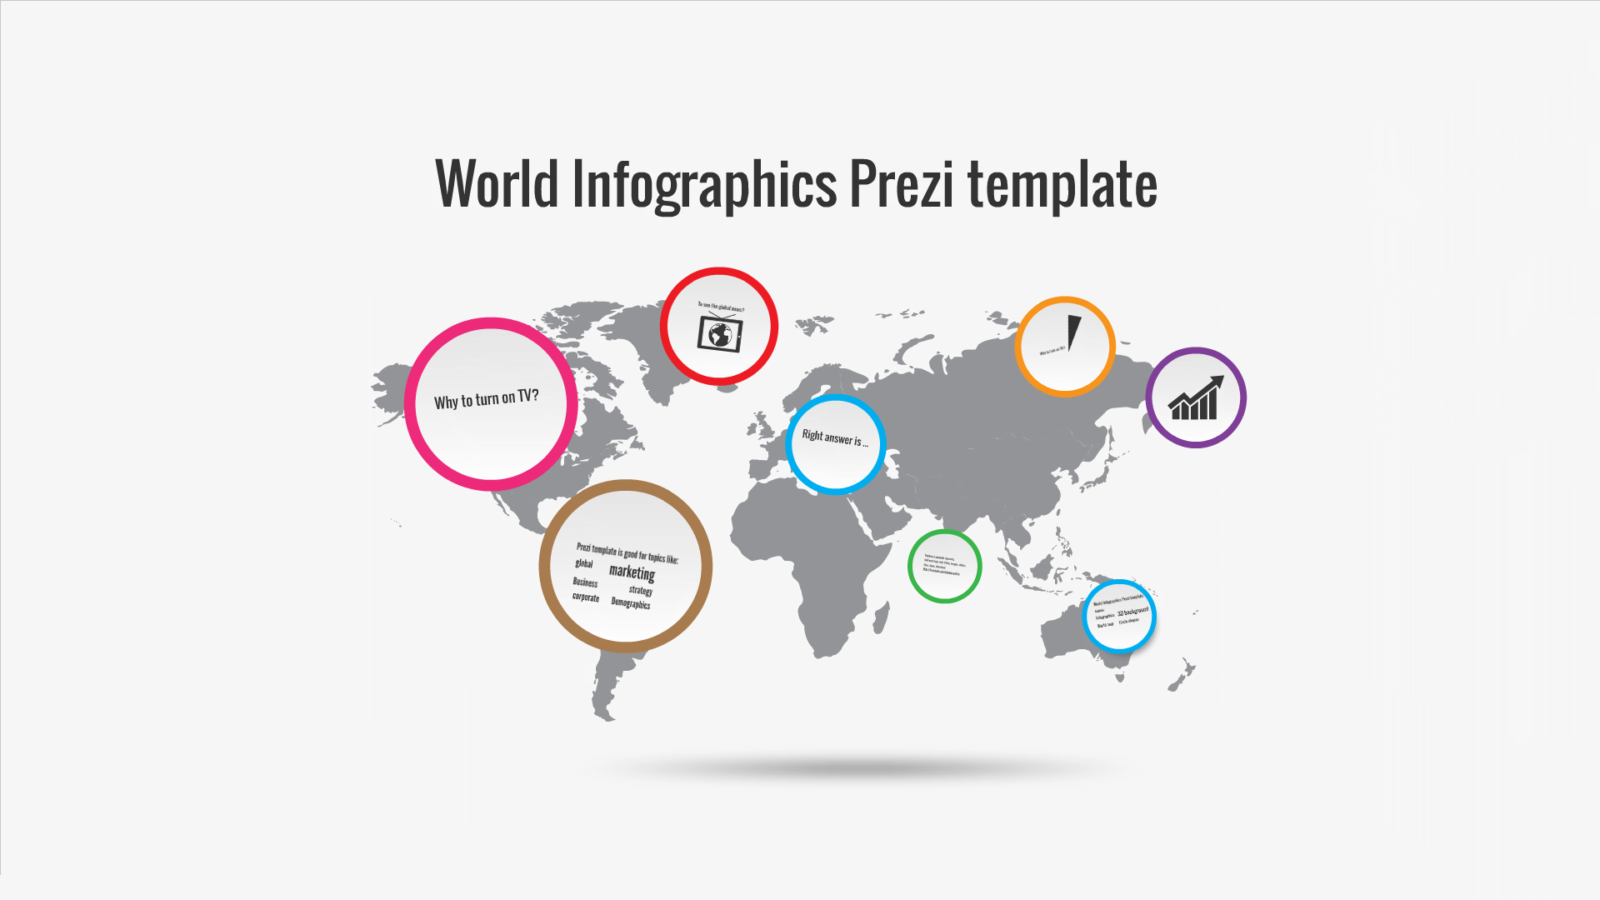 World Infographics Prezi template